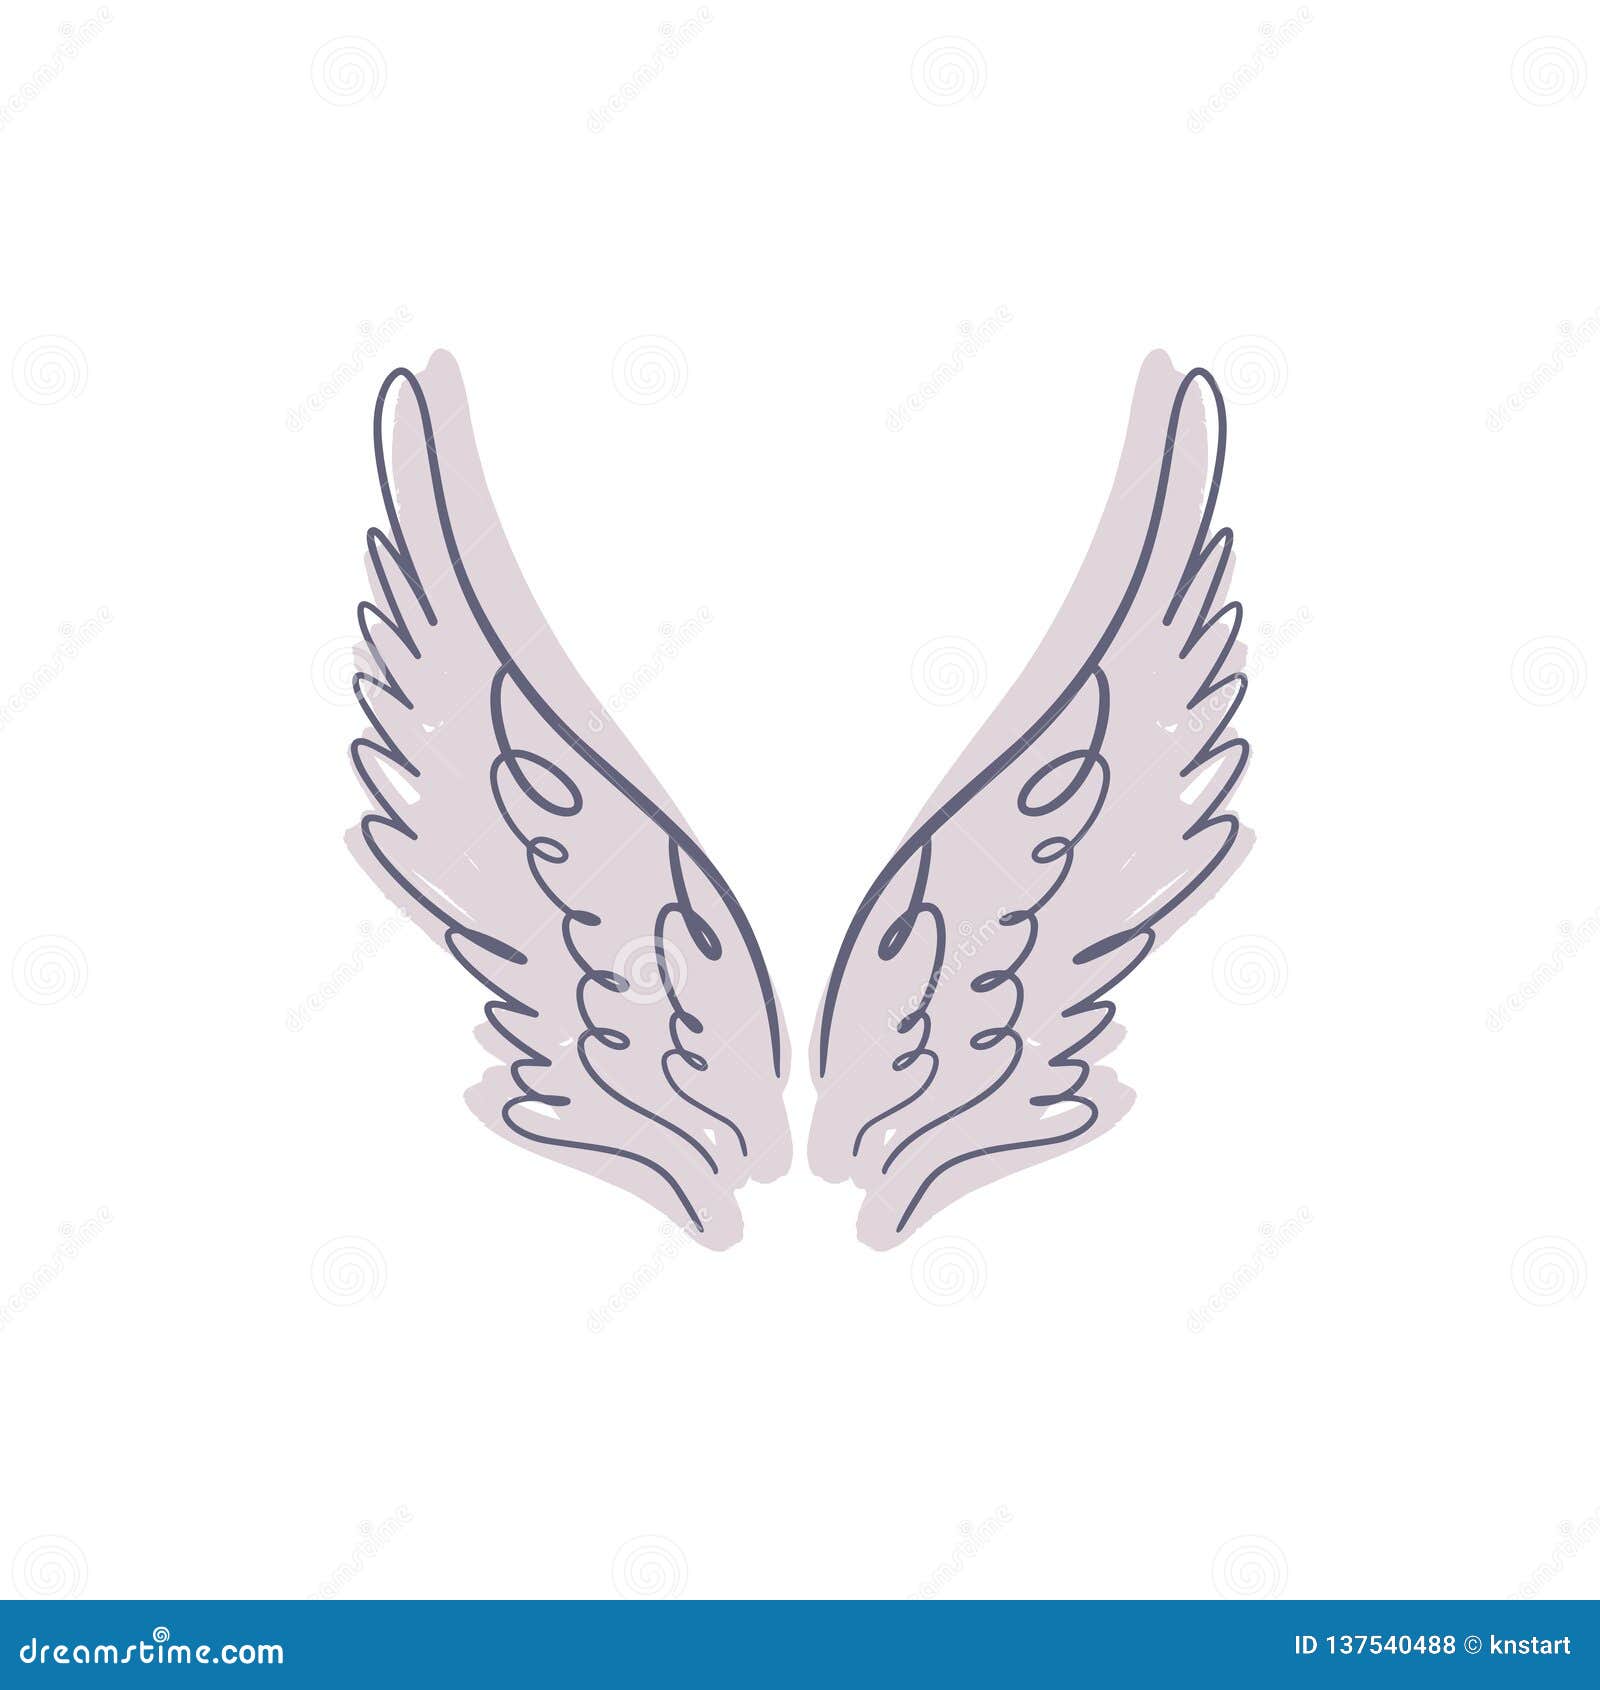 fly #plumas #wings #wing #tattoo #tattoos #woman #womanin… | Flickr